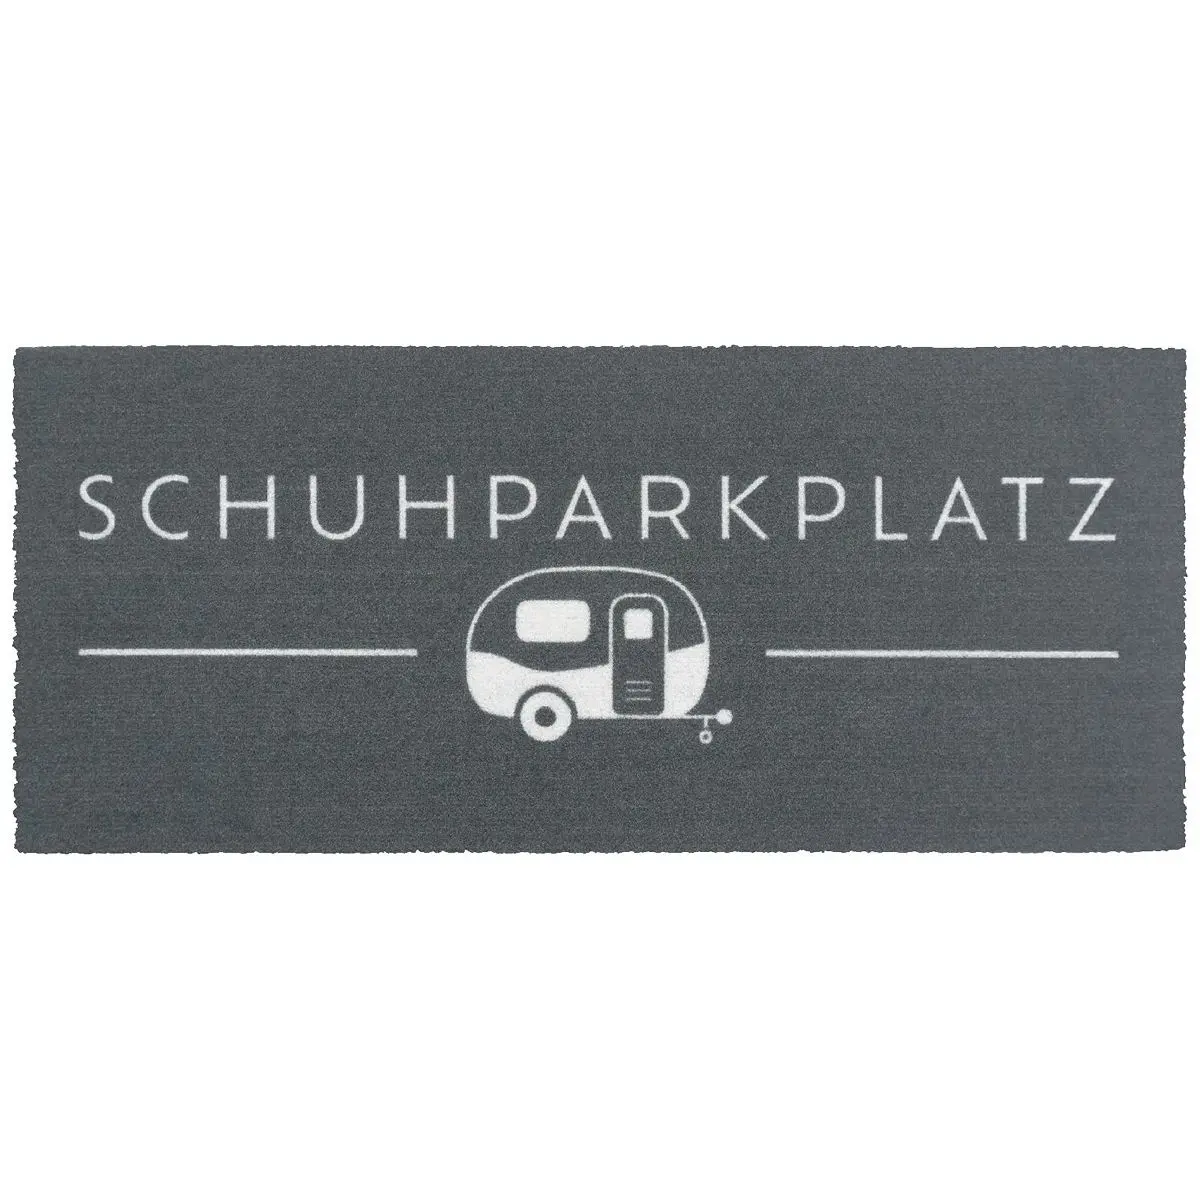 Fumatte Schuhparkplatz Caravan